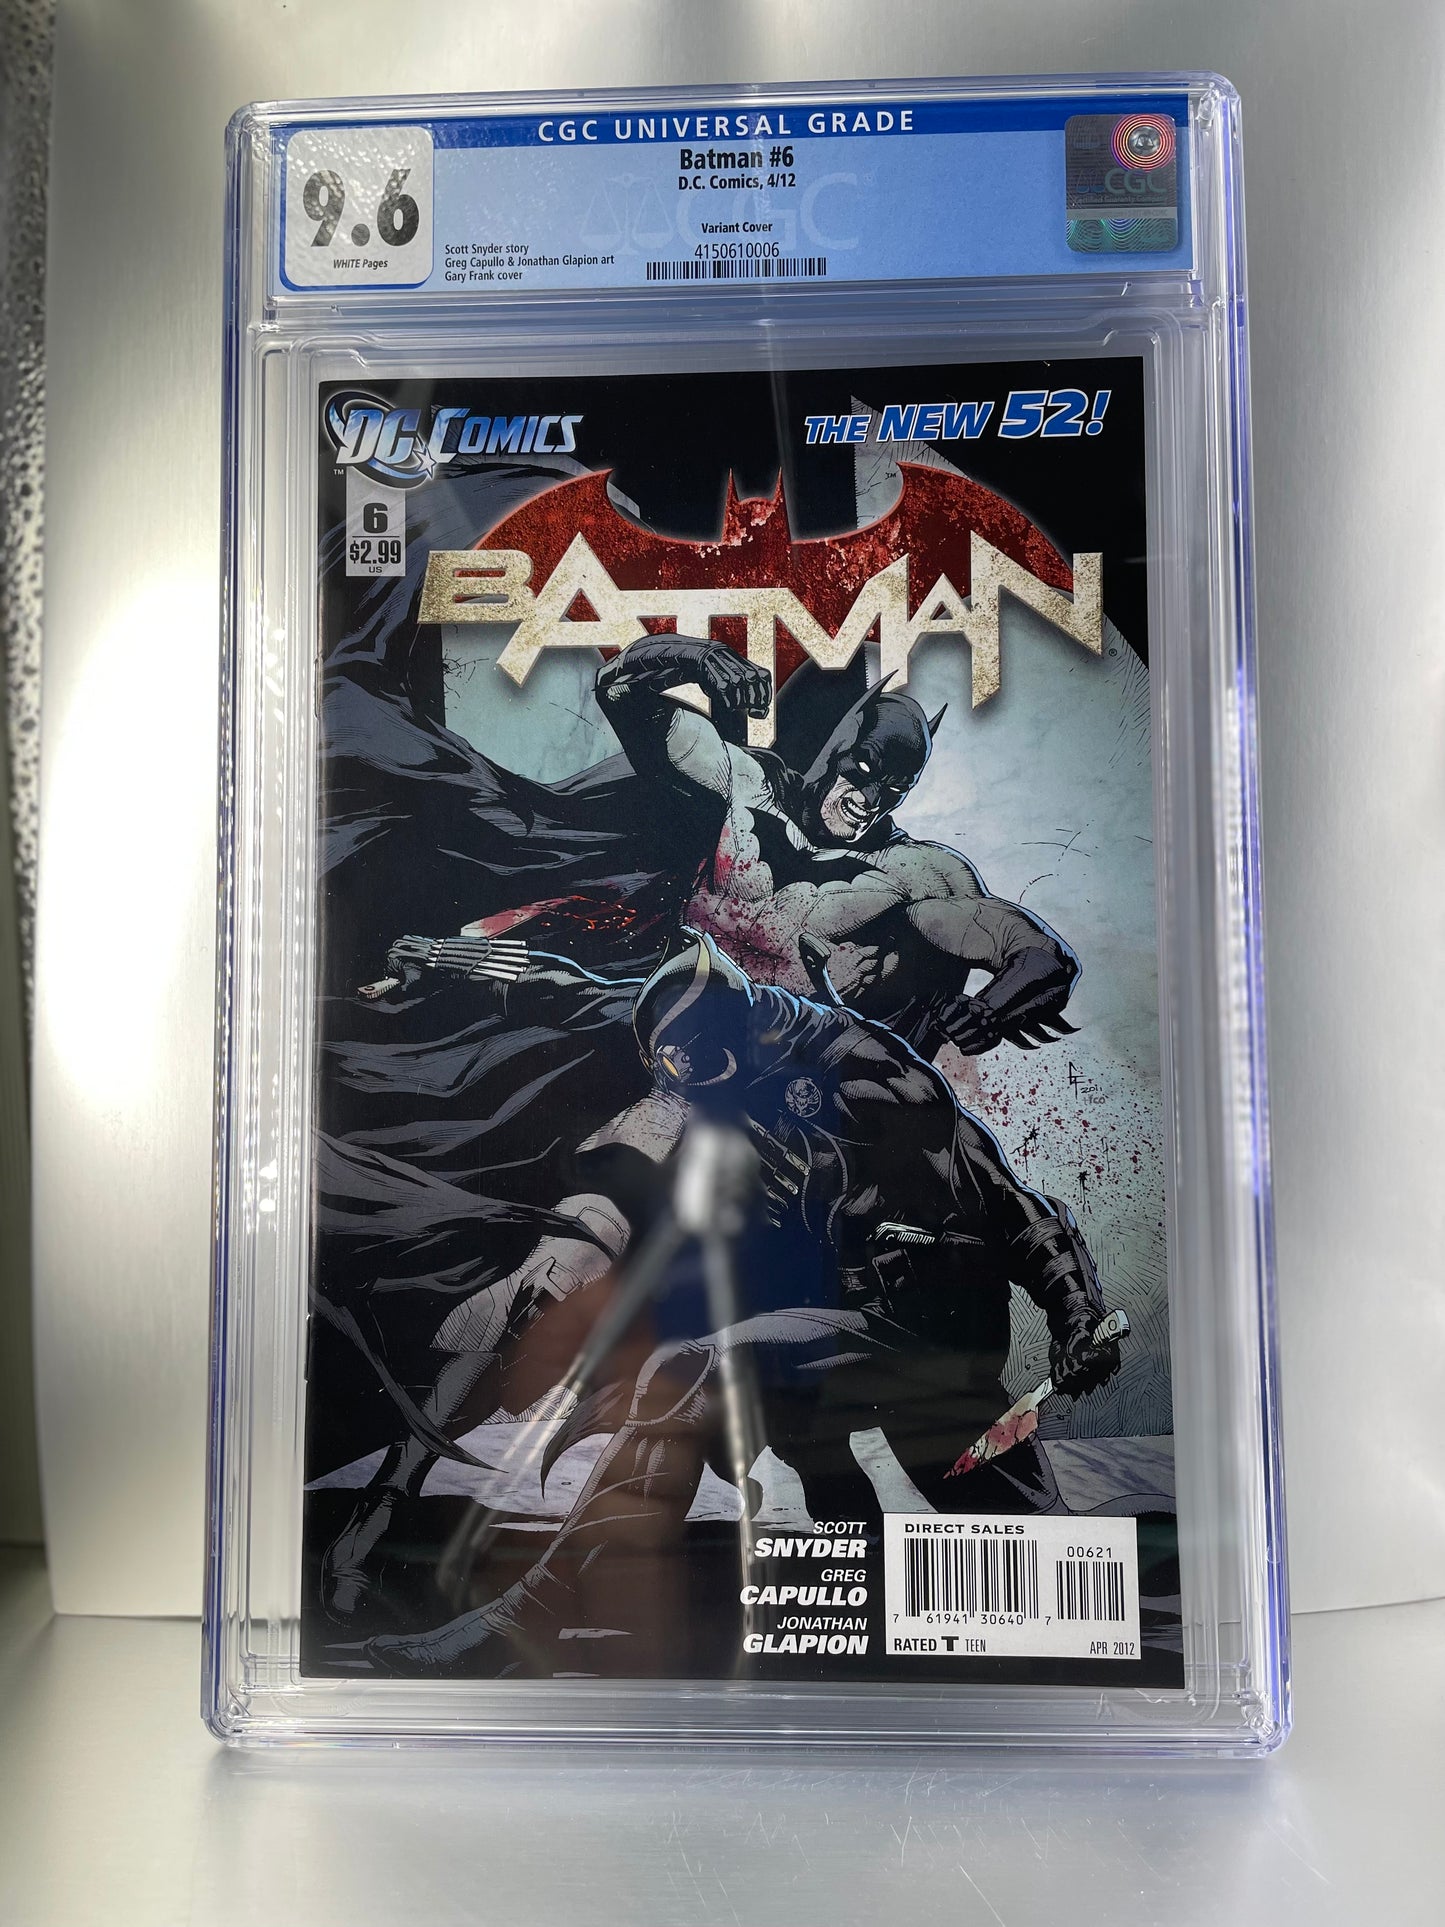 Batman #6 CGC 9.6 1:25 Variant Cover